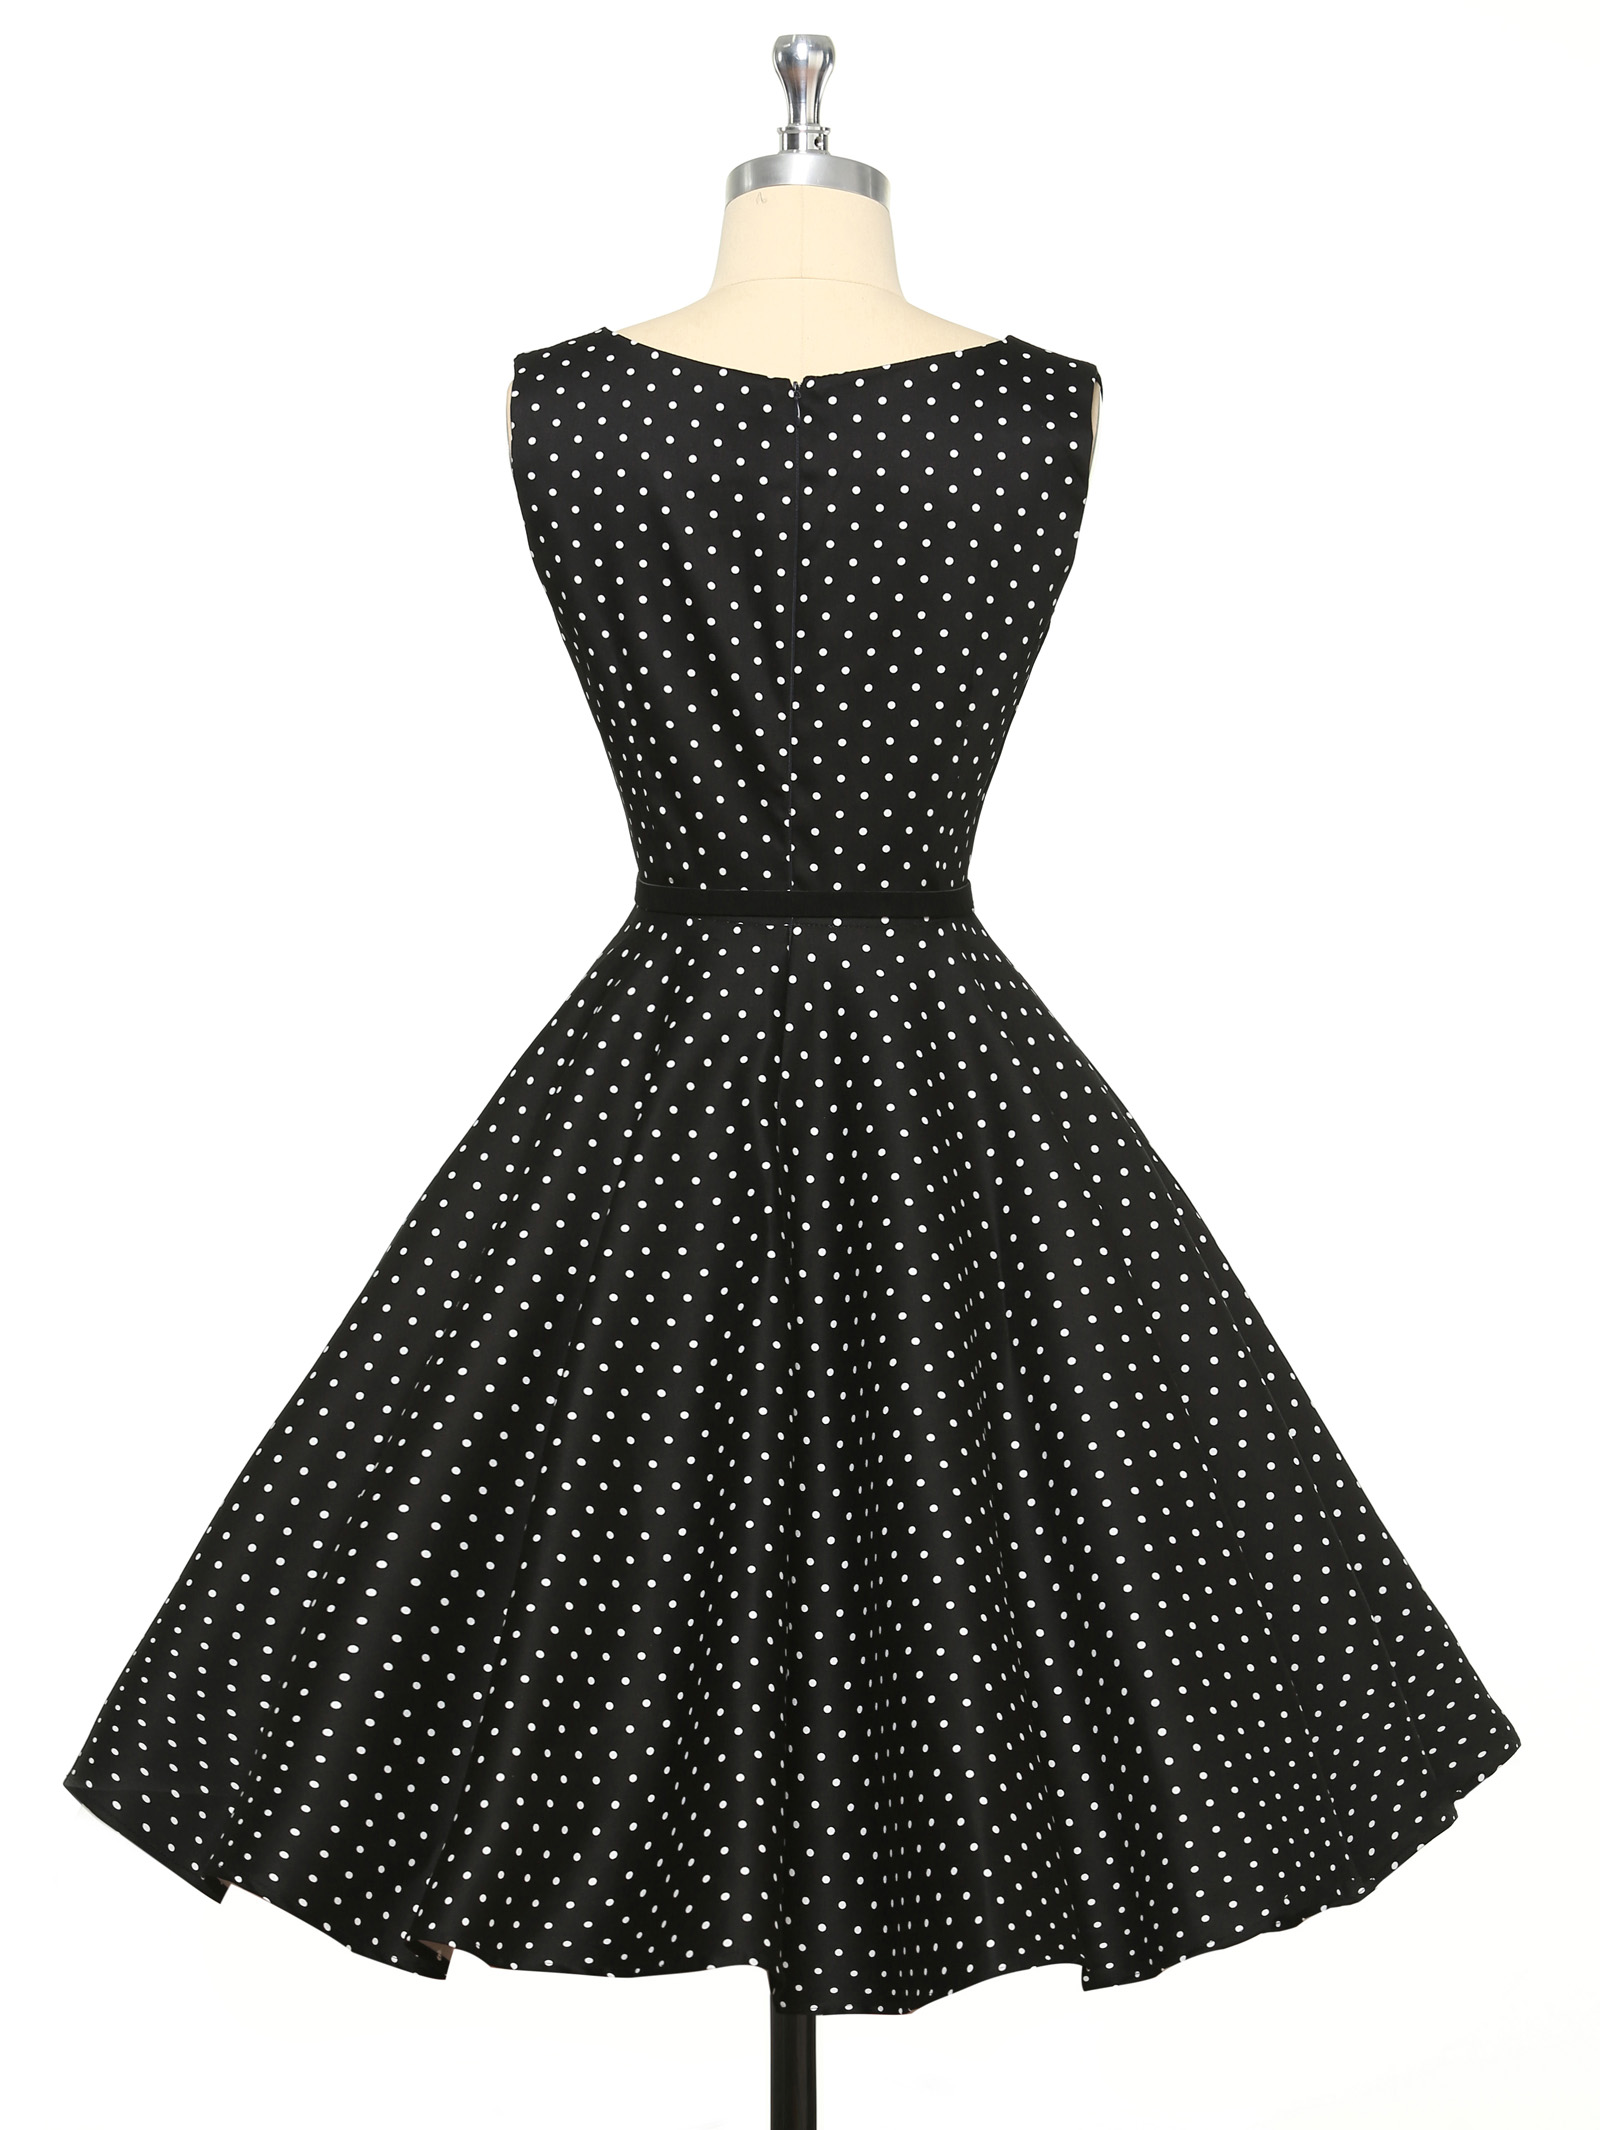 ‘Audrey’ polka dot dress | The Retro Collection